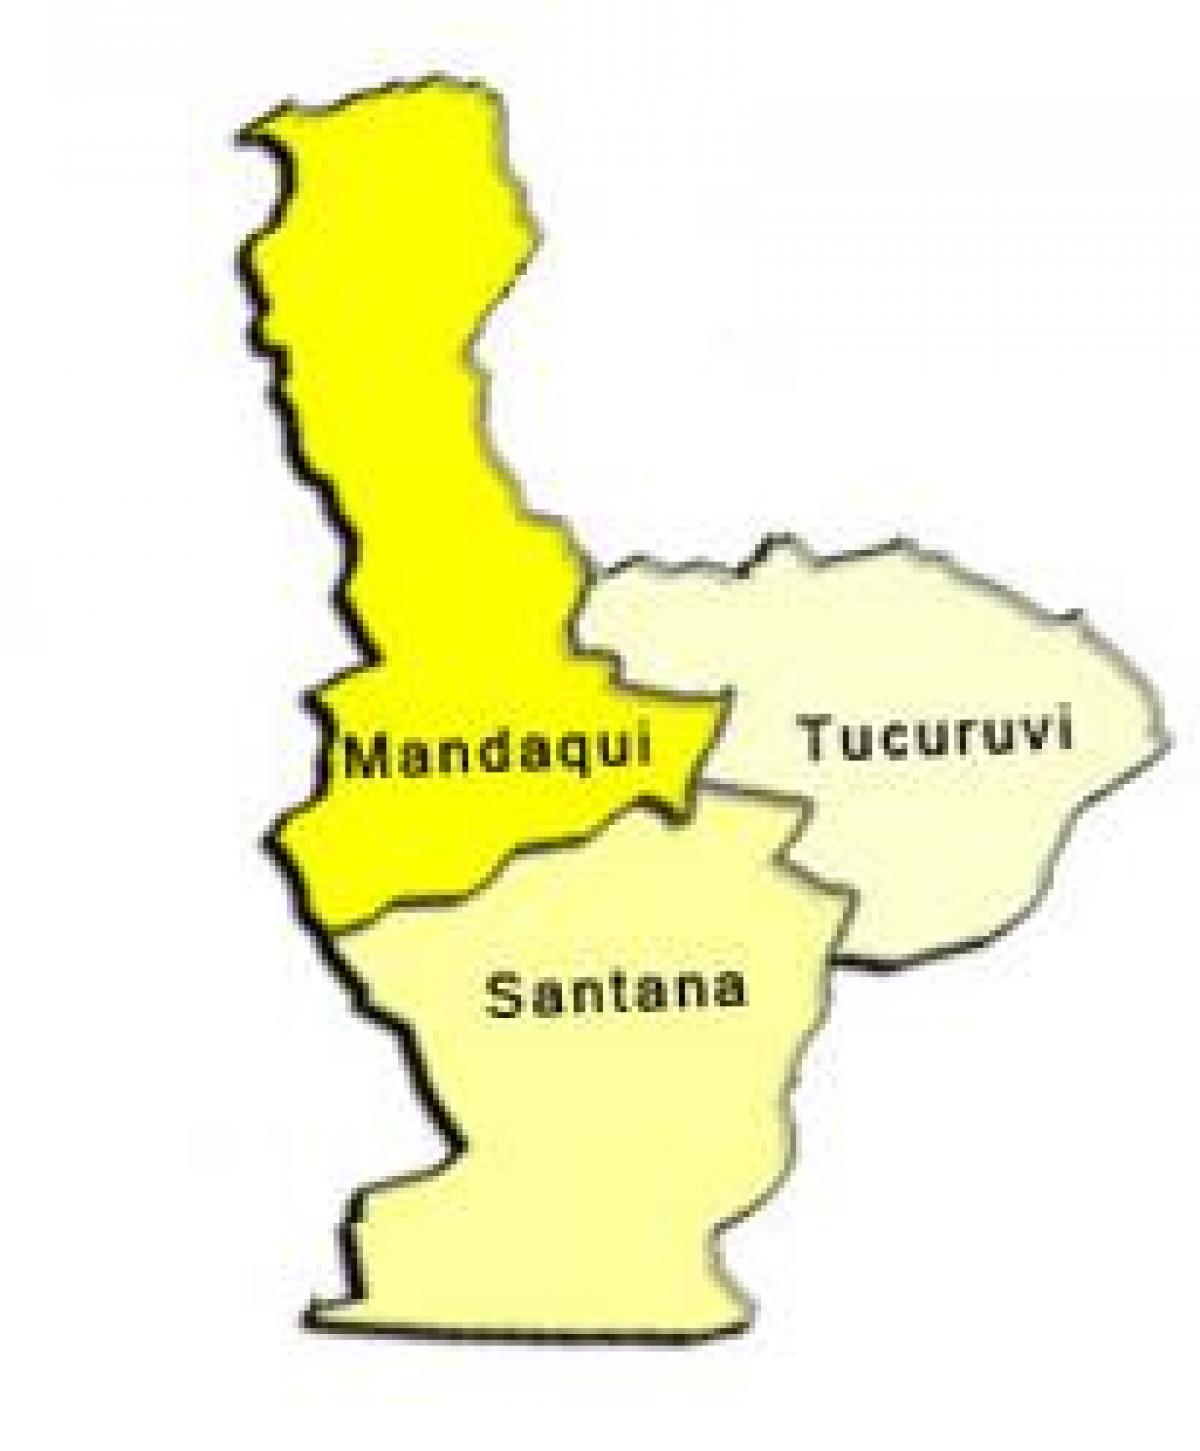 Map of Santana sub-prefecture